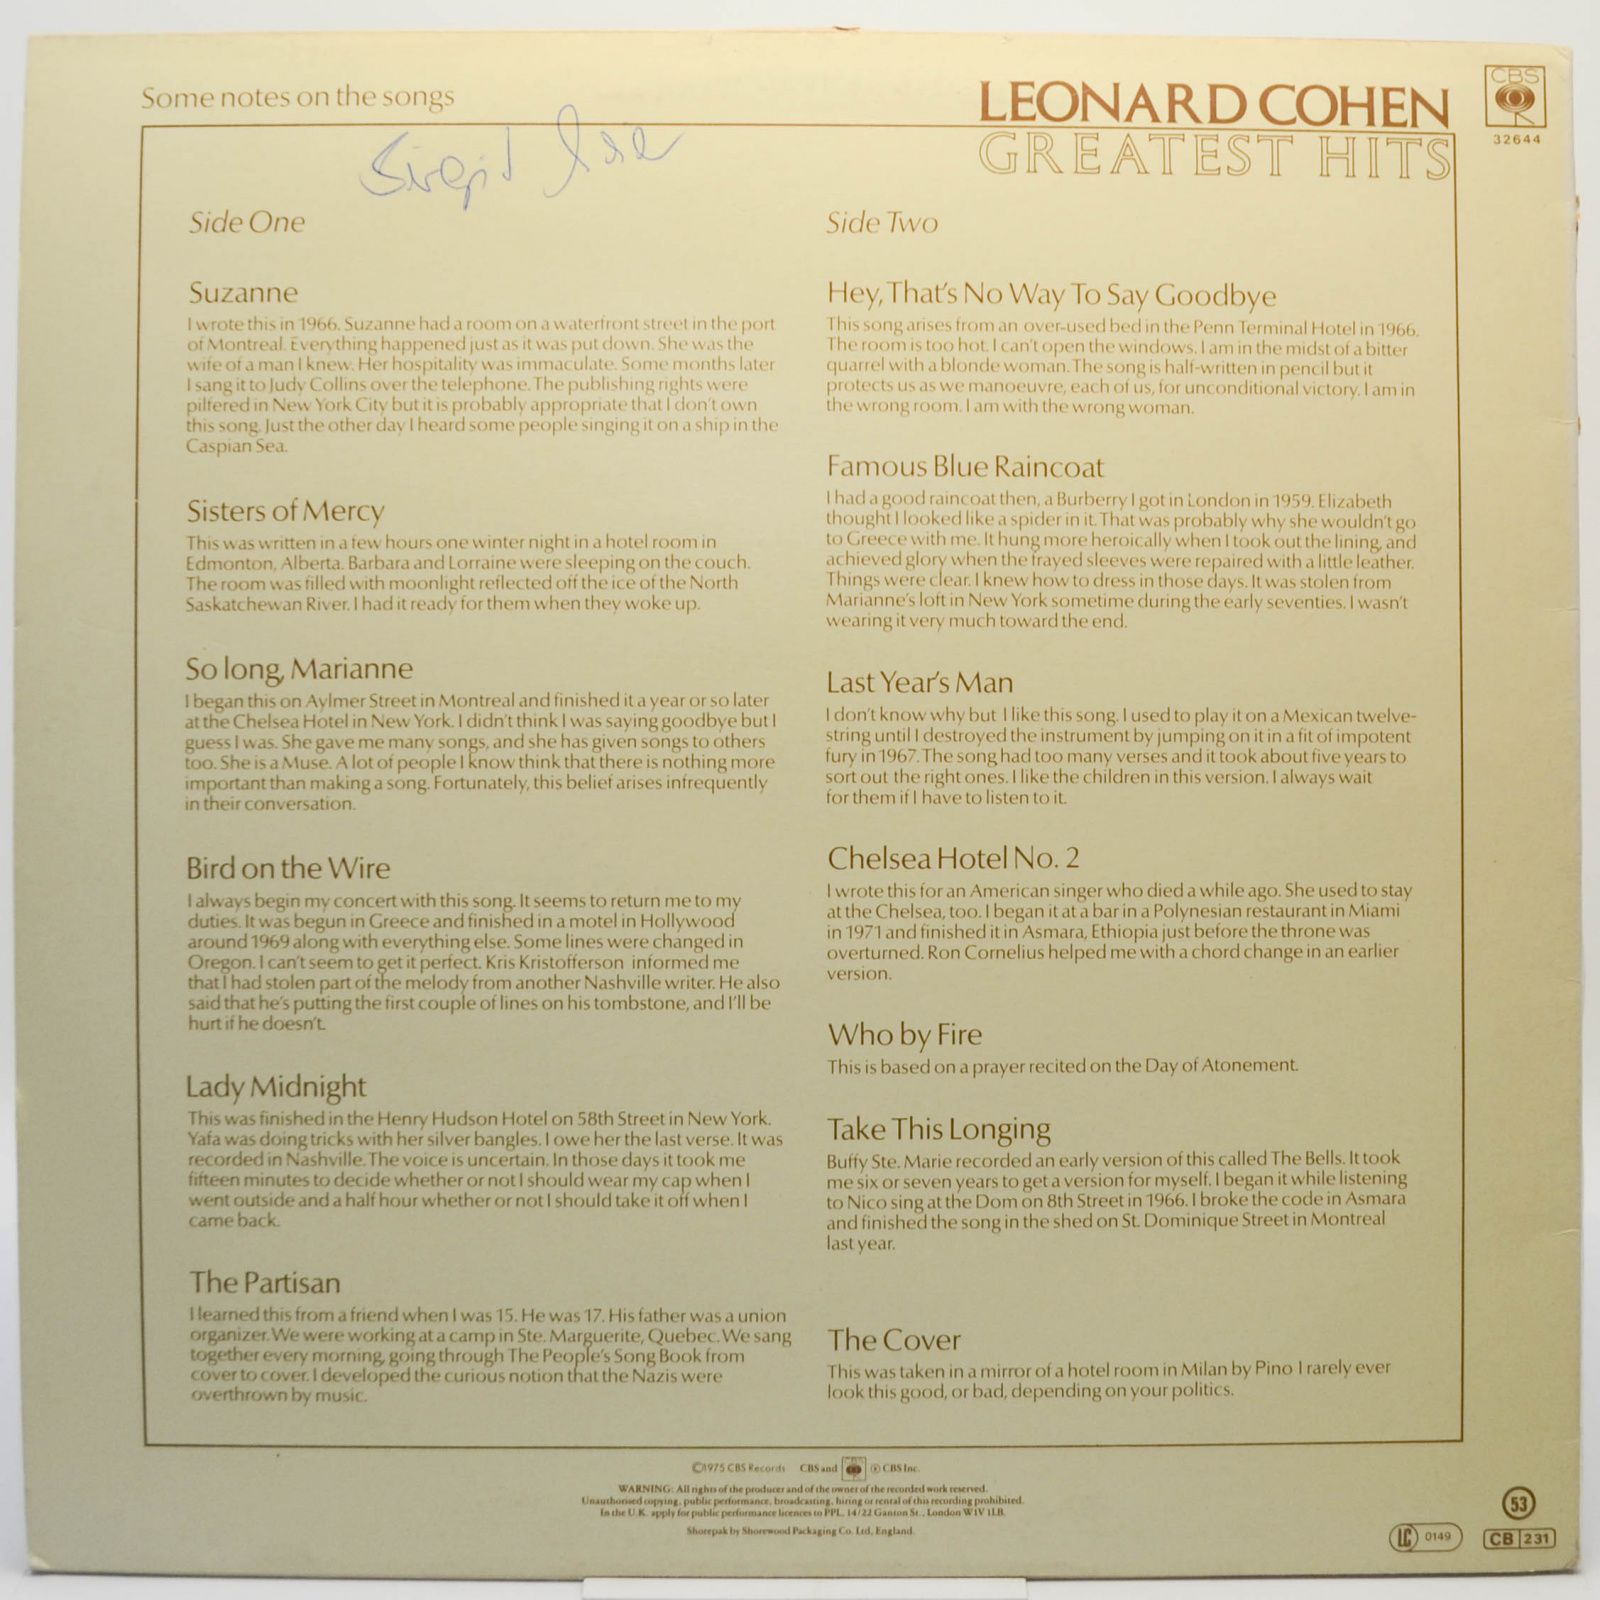 Leonard Cohen — Greatest Hits (UK), 1975